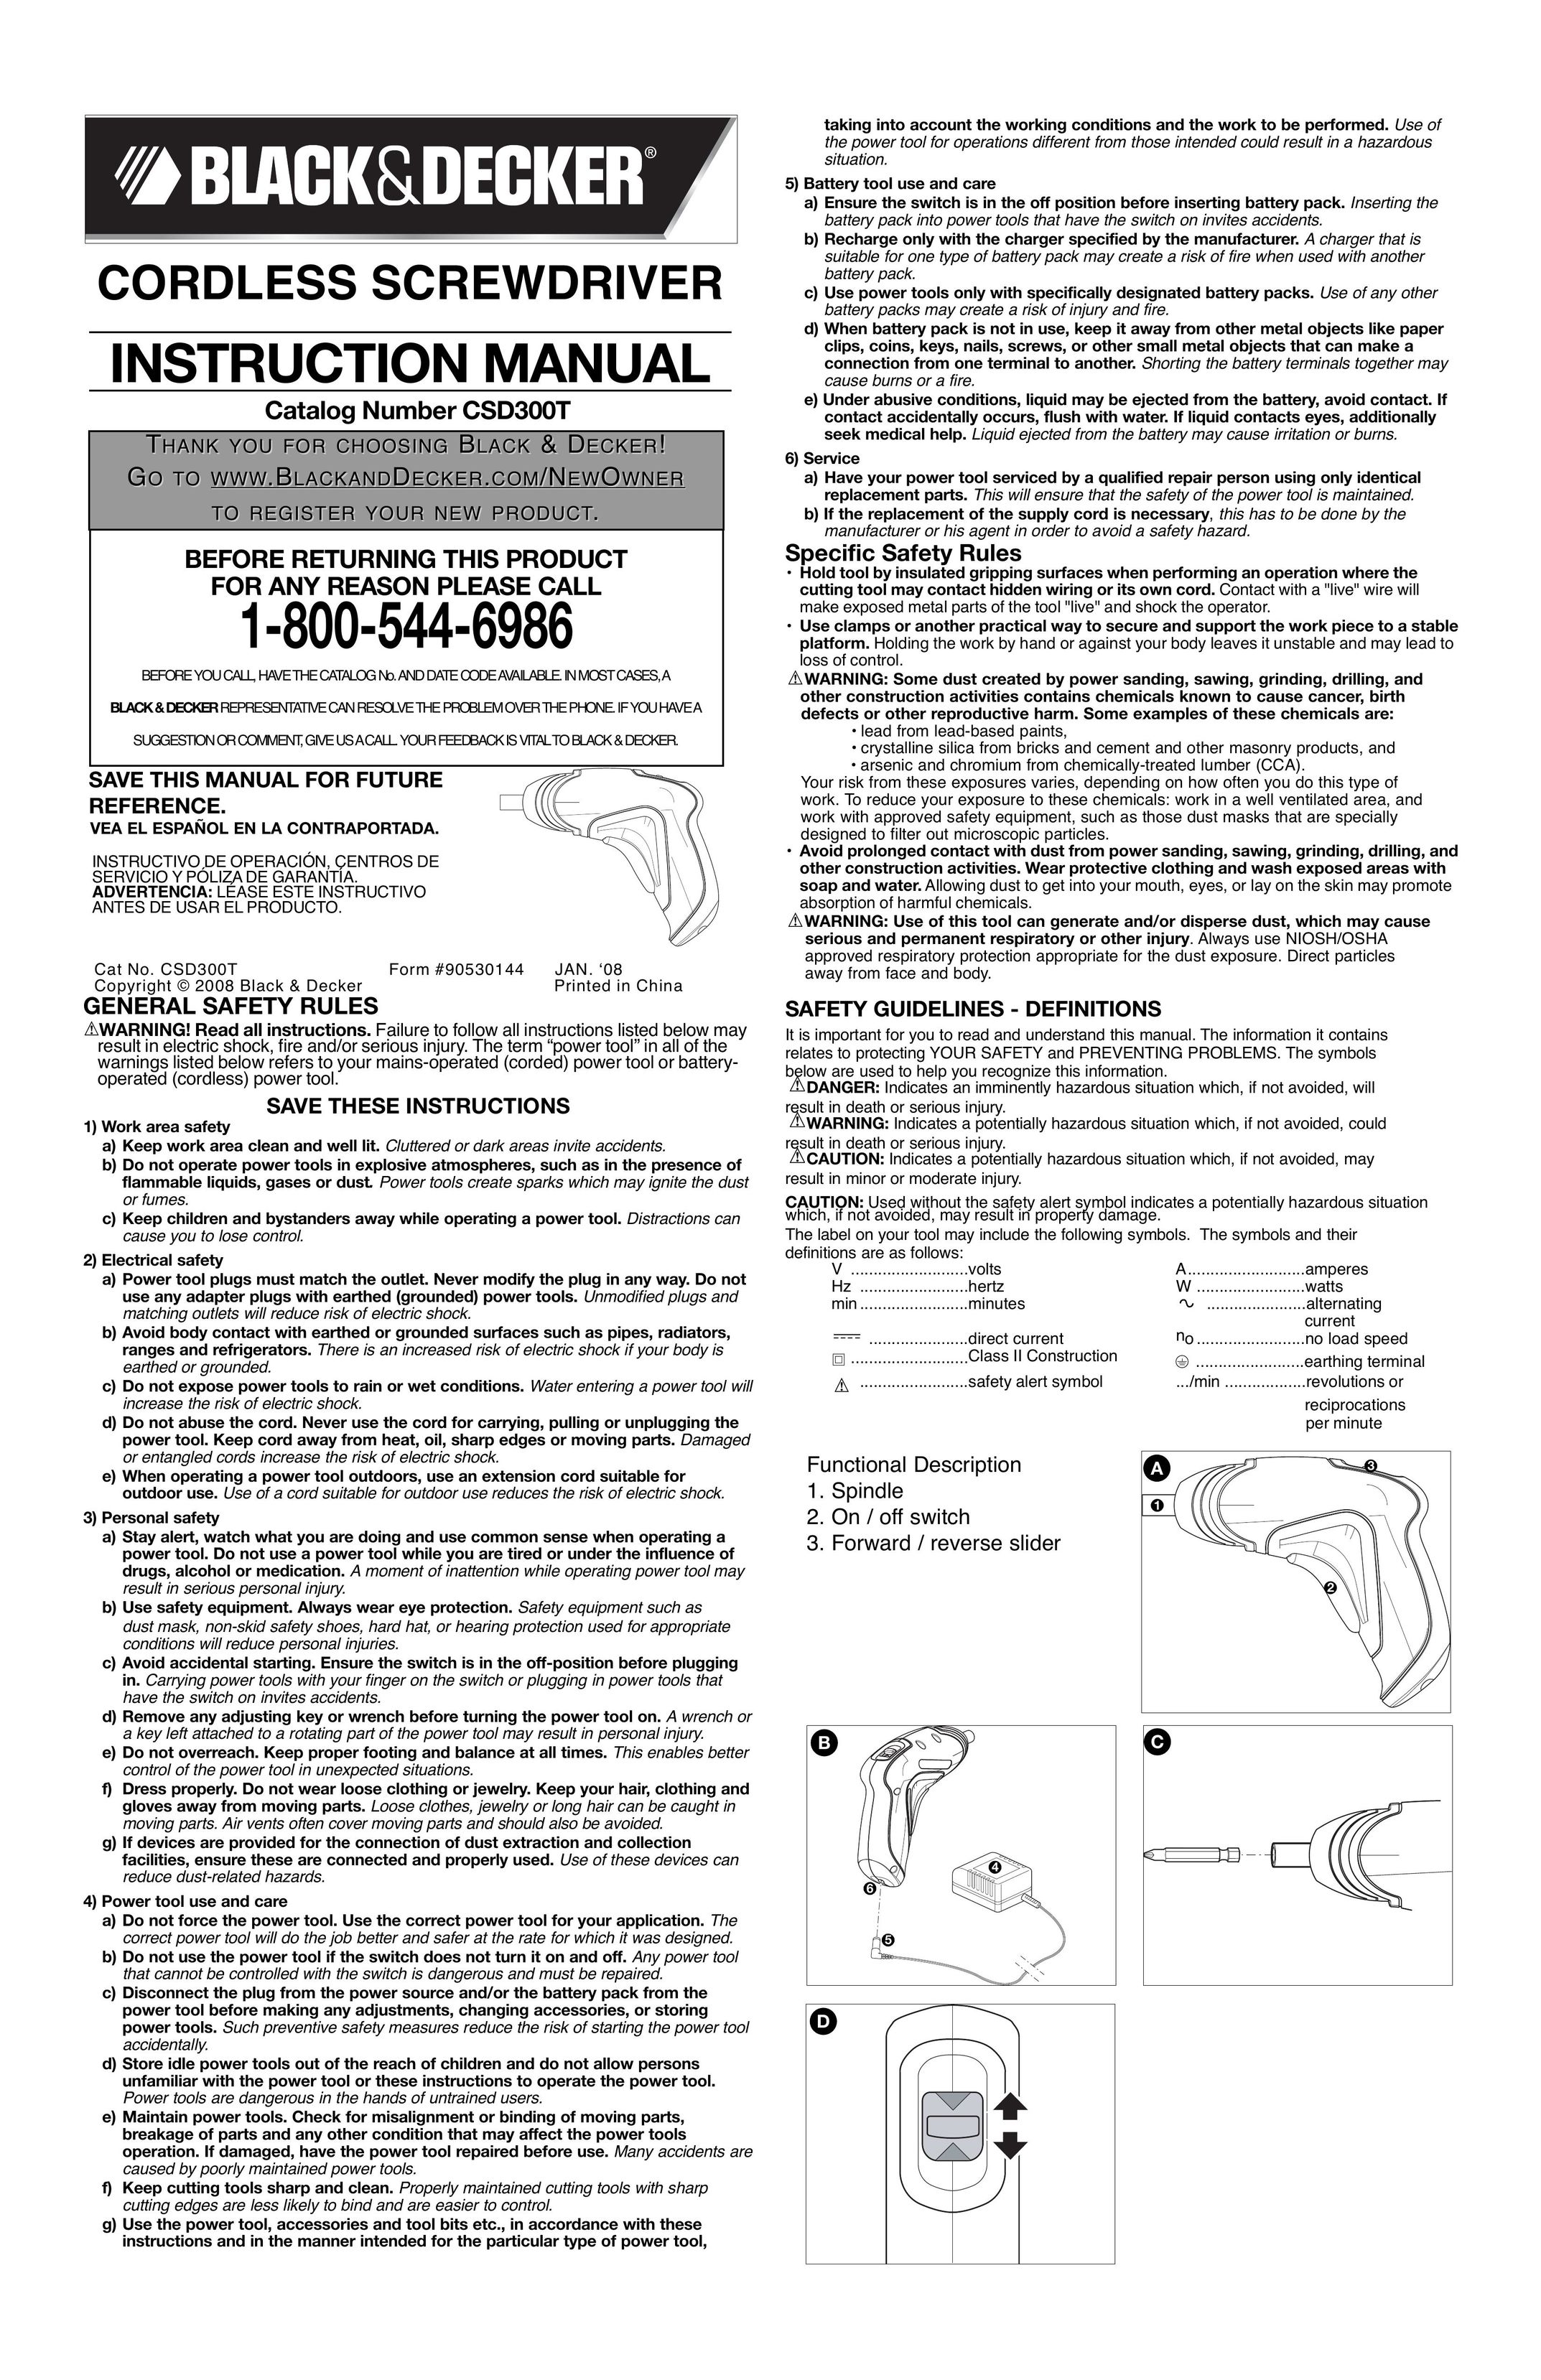 Black & Decker CSD300T Power Screwdriver User Manual